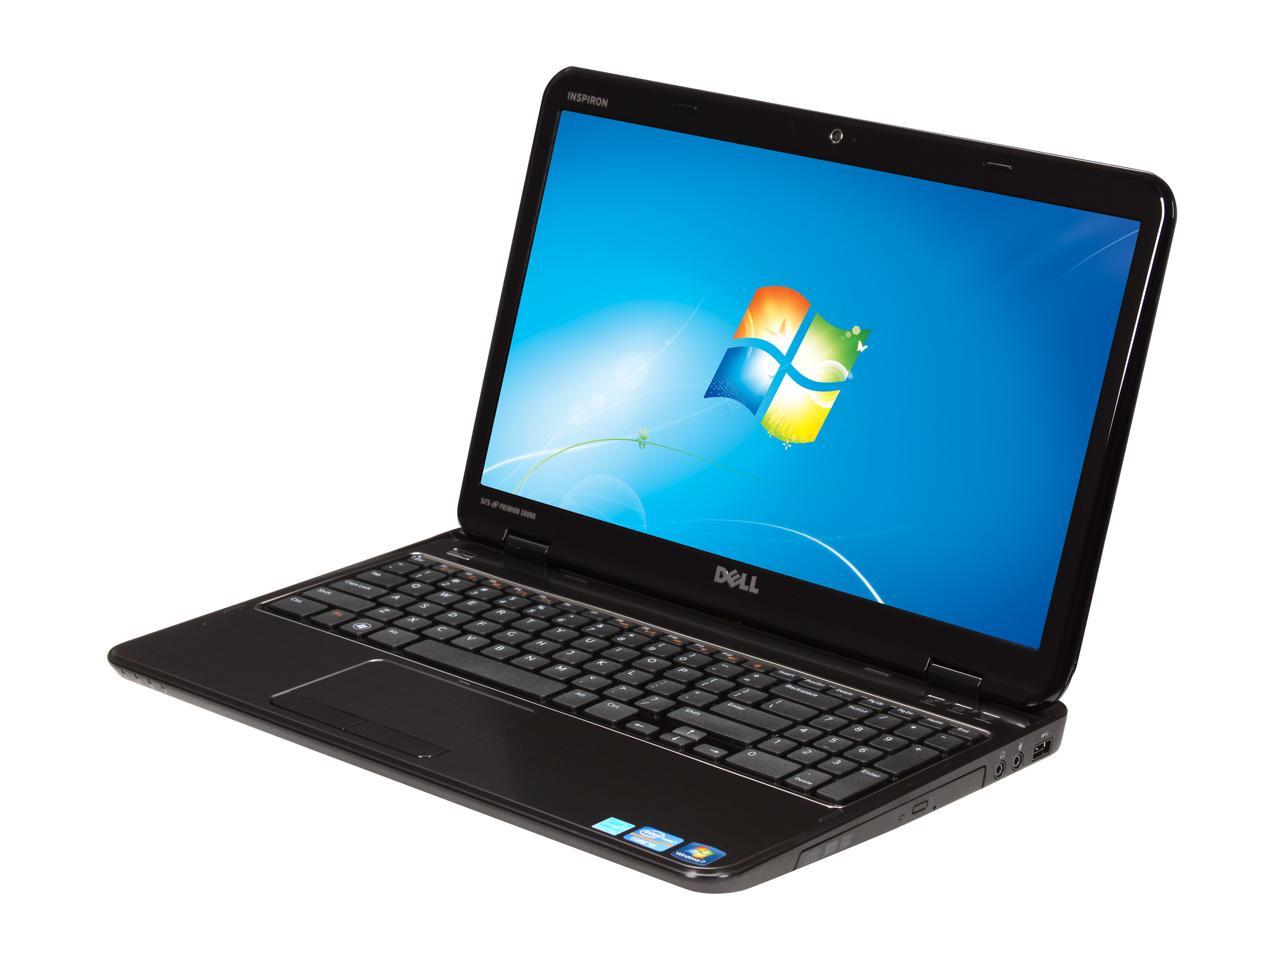 DELL Laptop Inspiron 15R (N5110) Intel Core i5 2nd Gen 2410M (2.30 